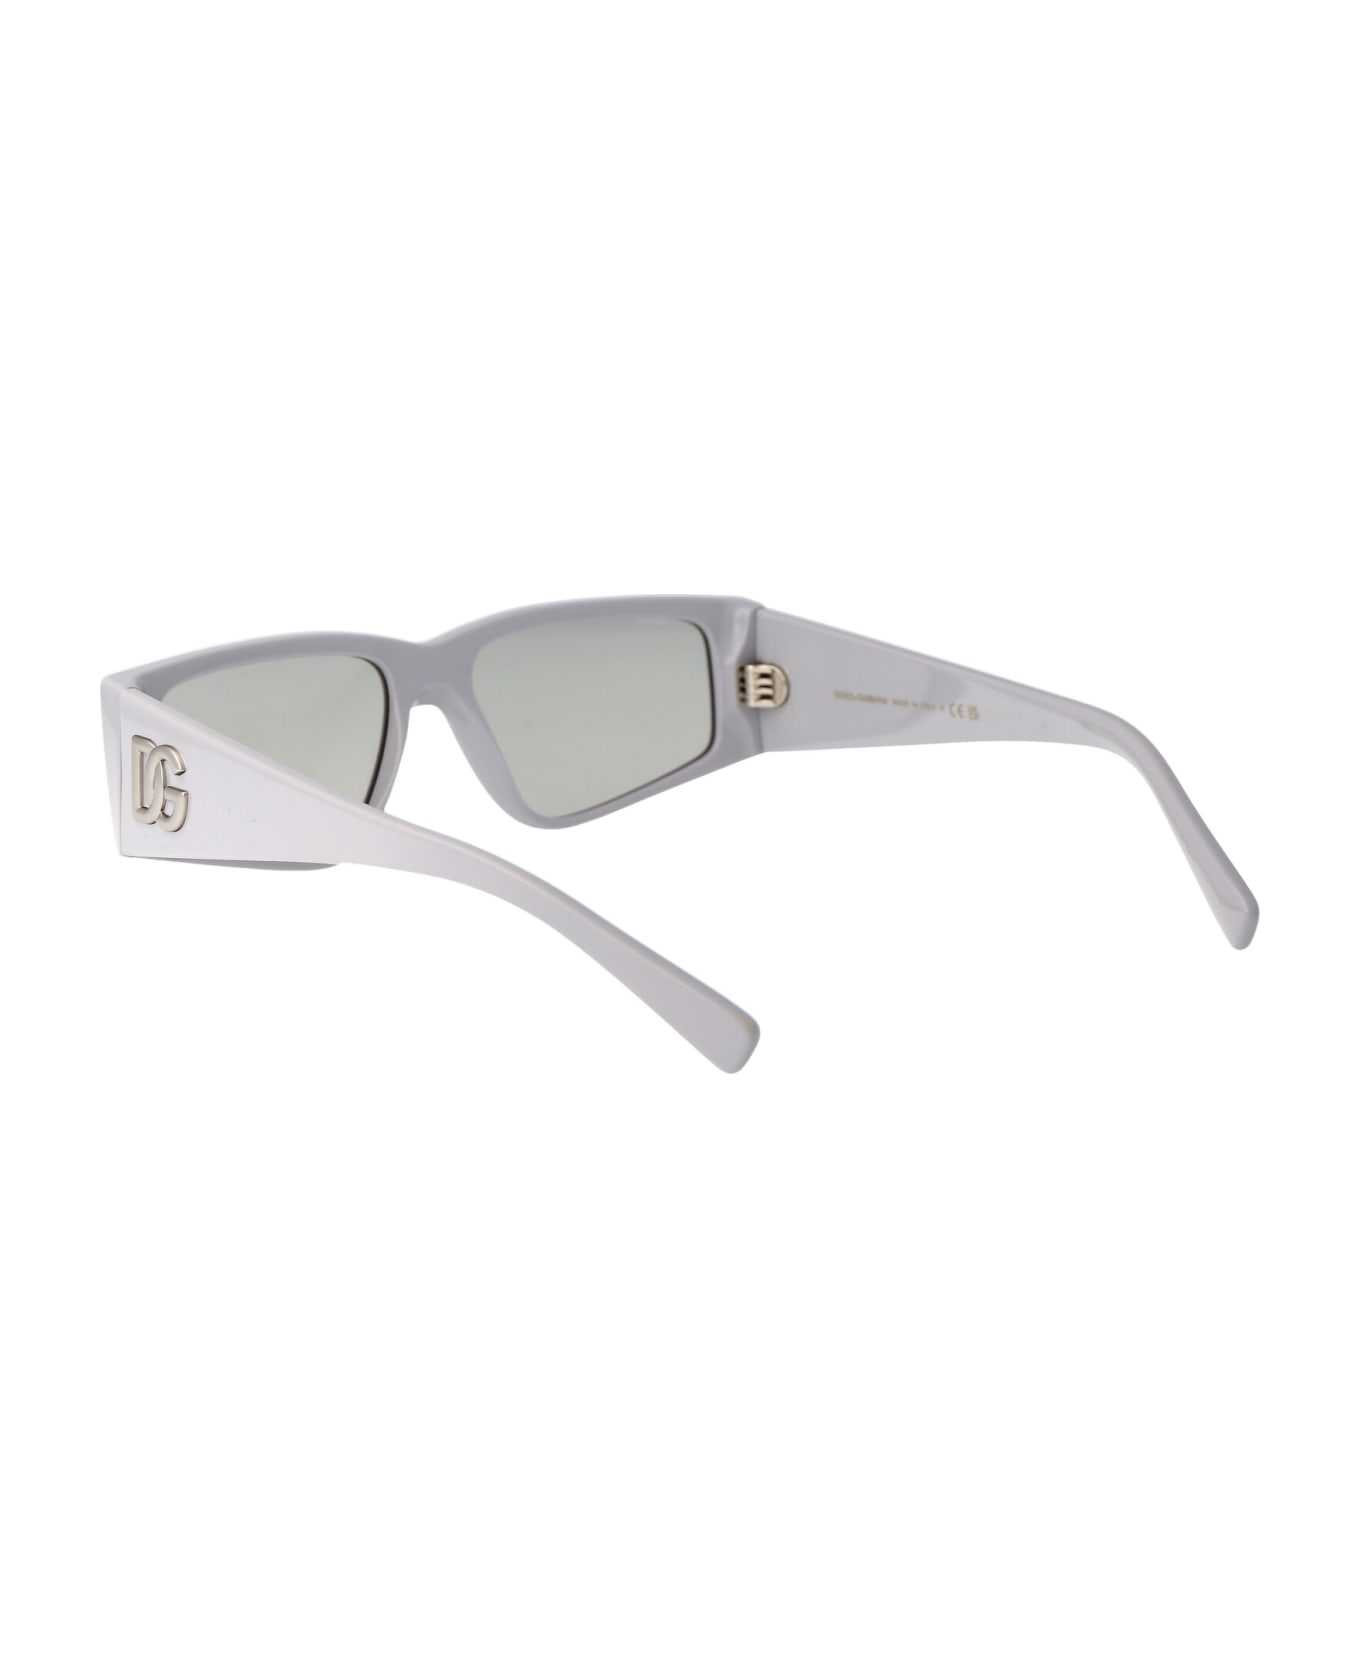 Great fitting sunglasses Eyewear 0dg4453 Sunglasses - 341887 Light Grey